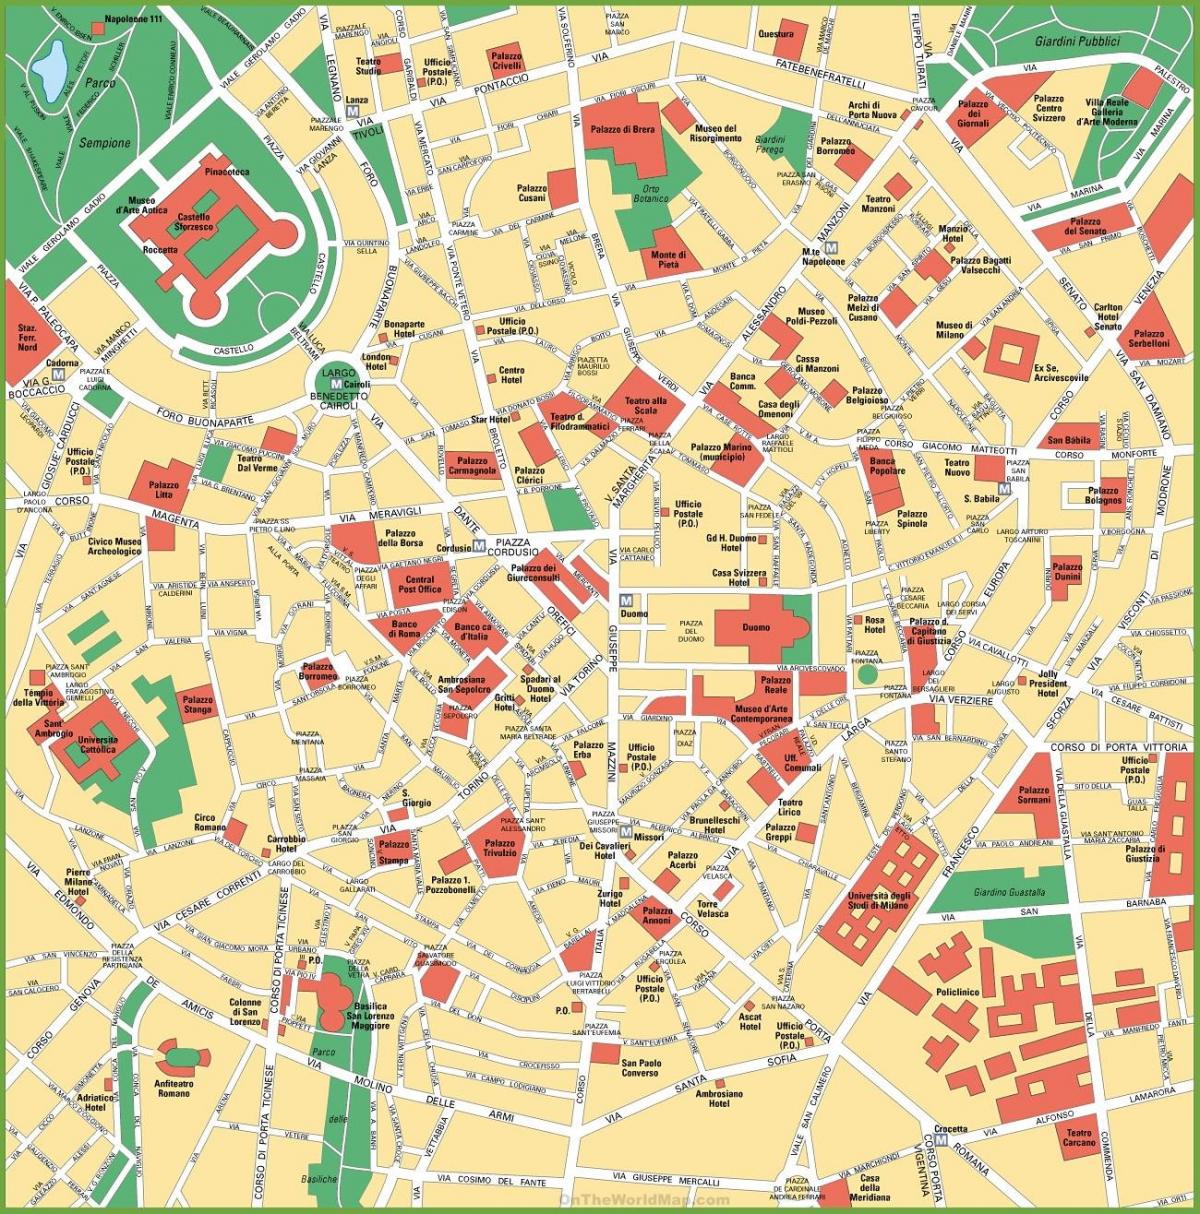 milano city center mapu